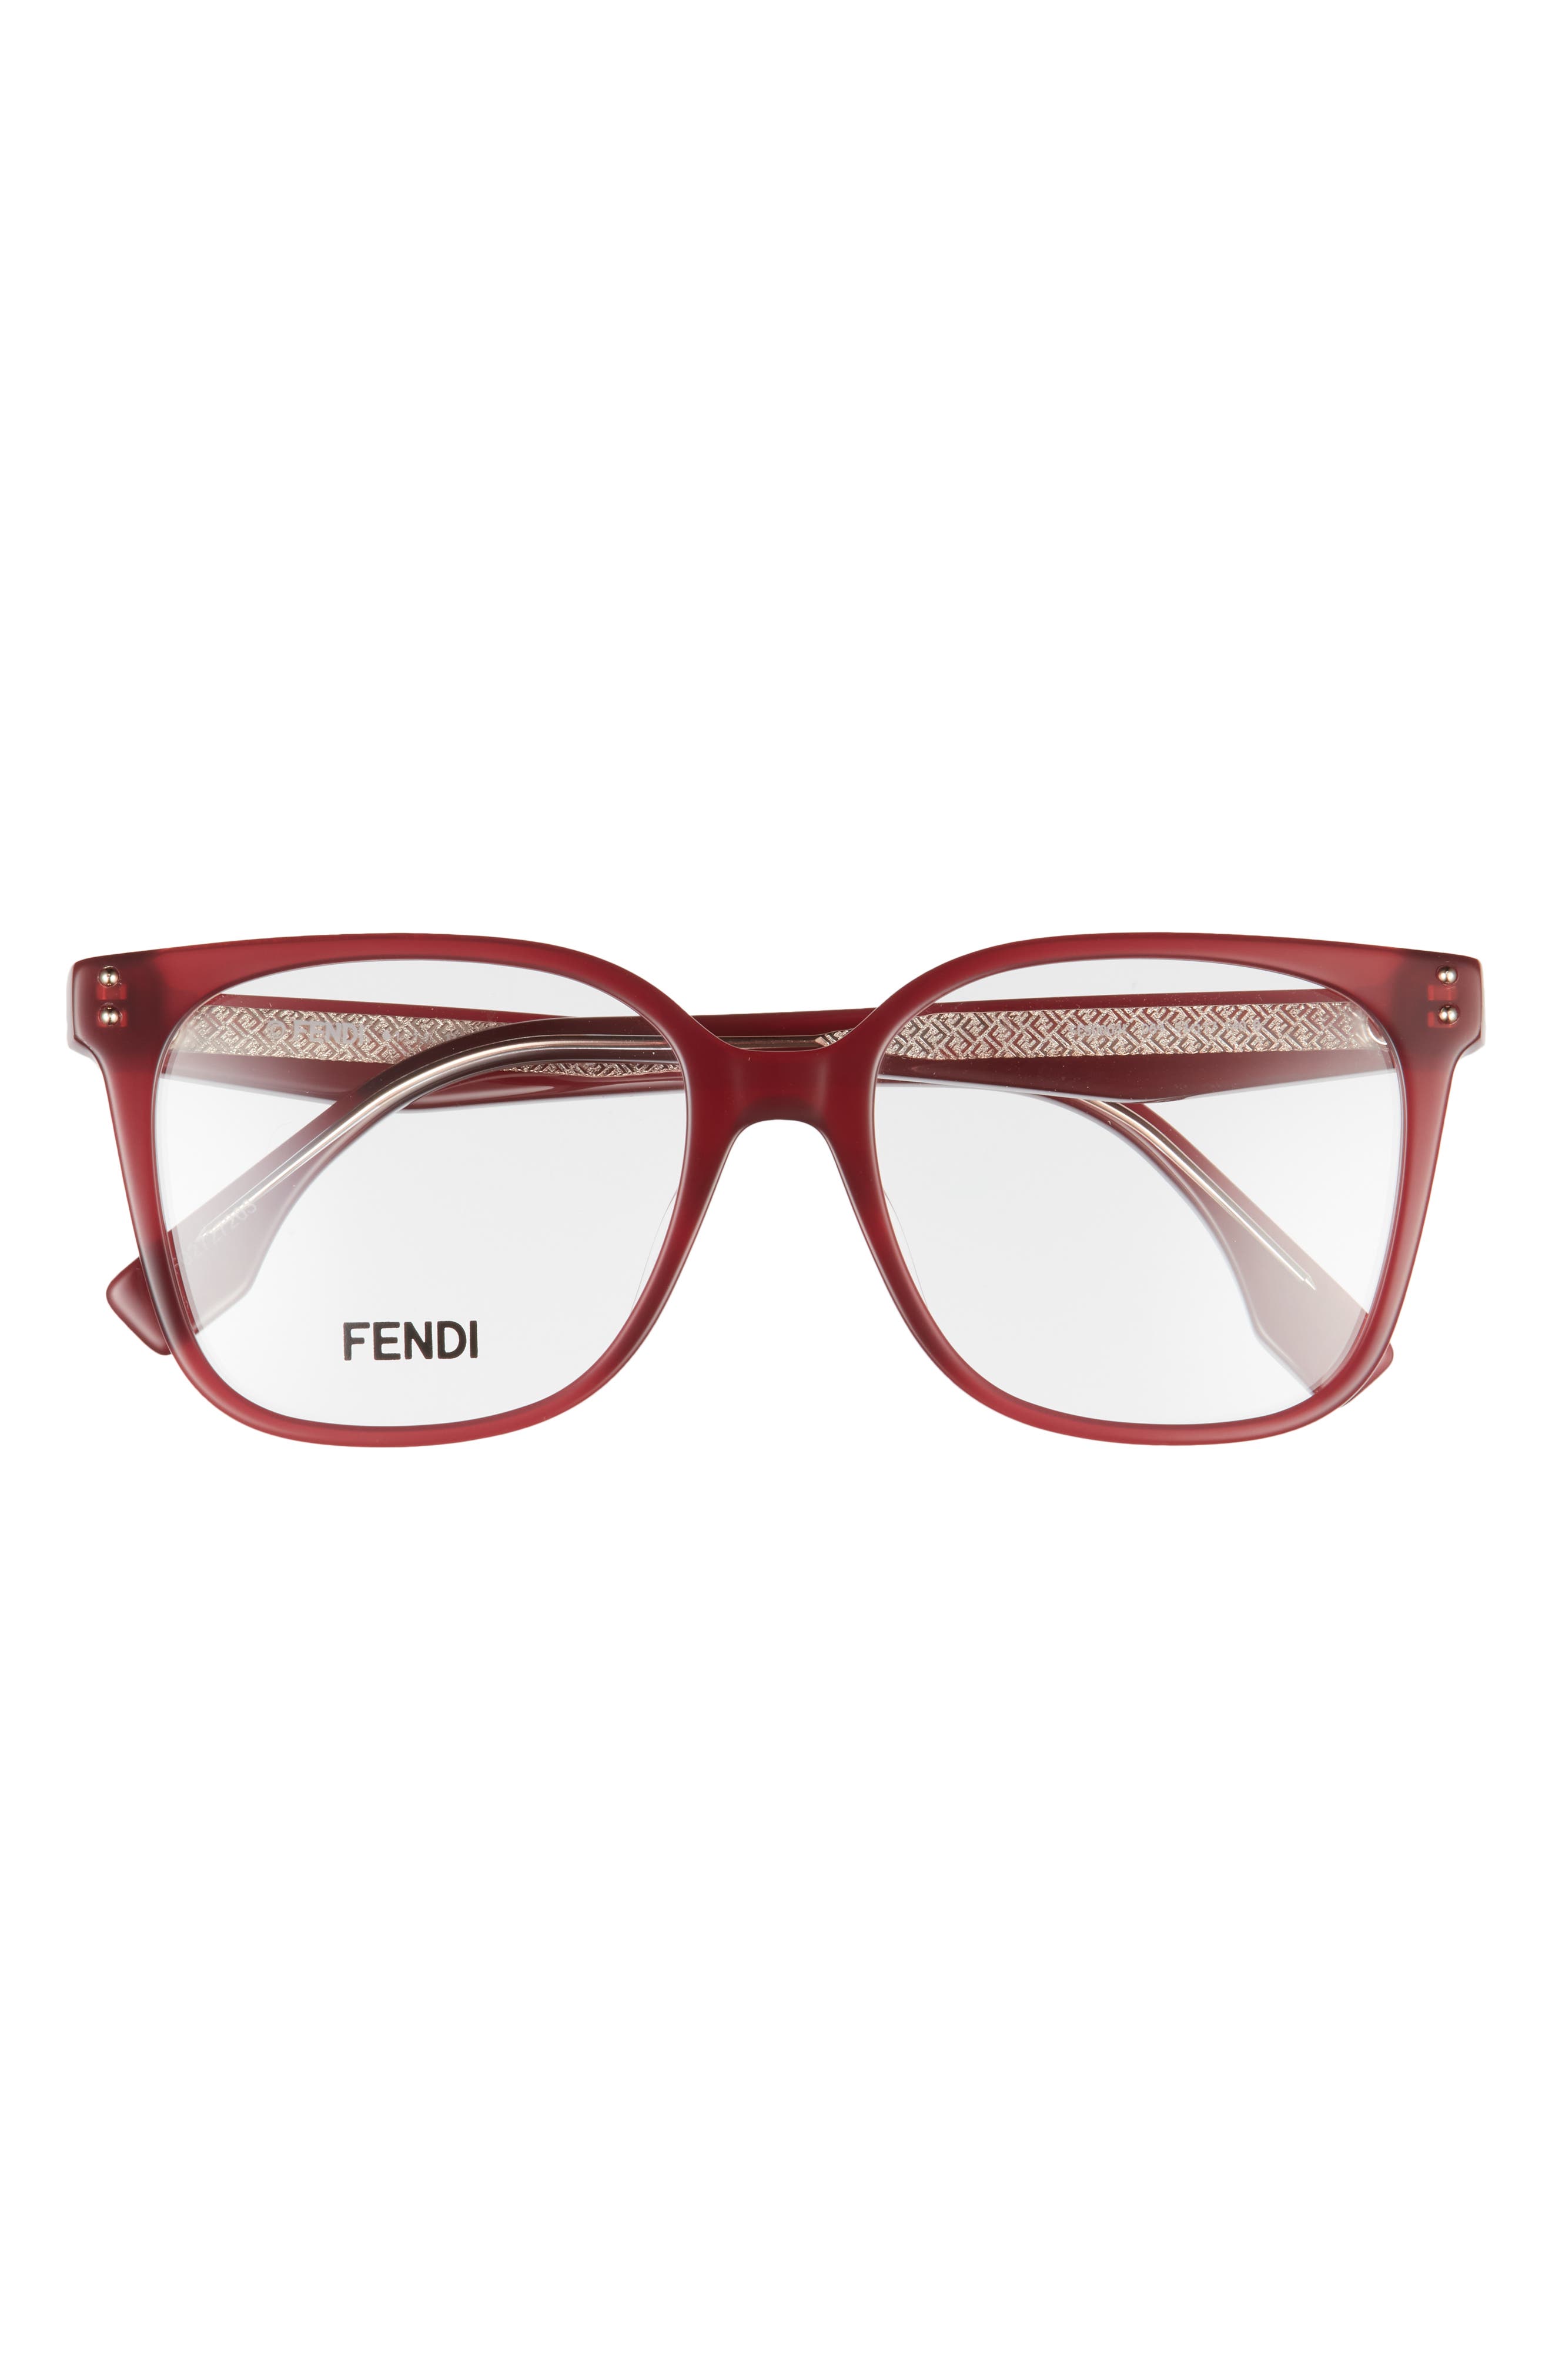 Fendi 53m Square Optical Glasses in Shiny Bordeaux at Nordstrom